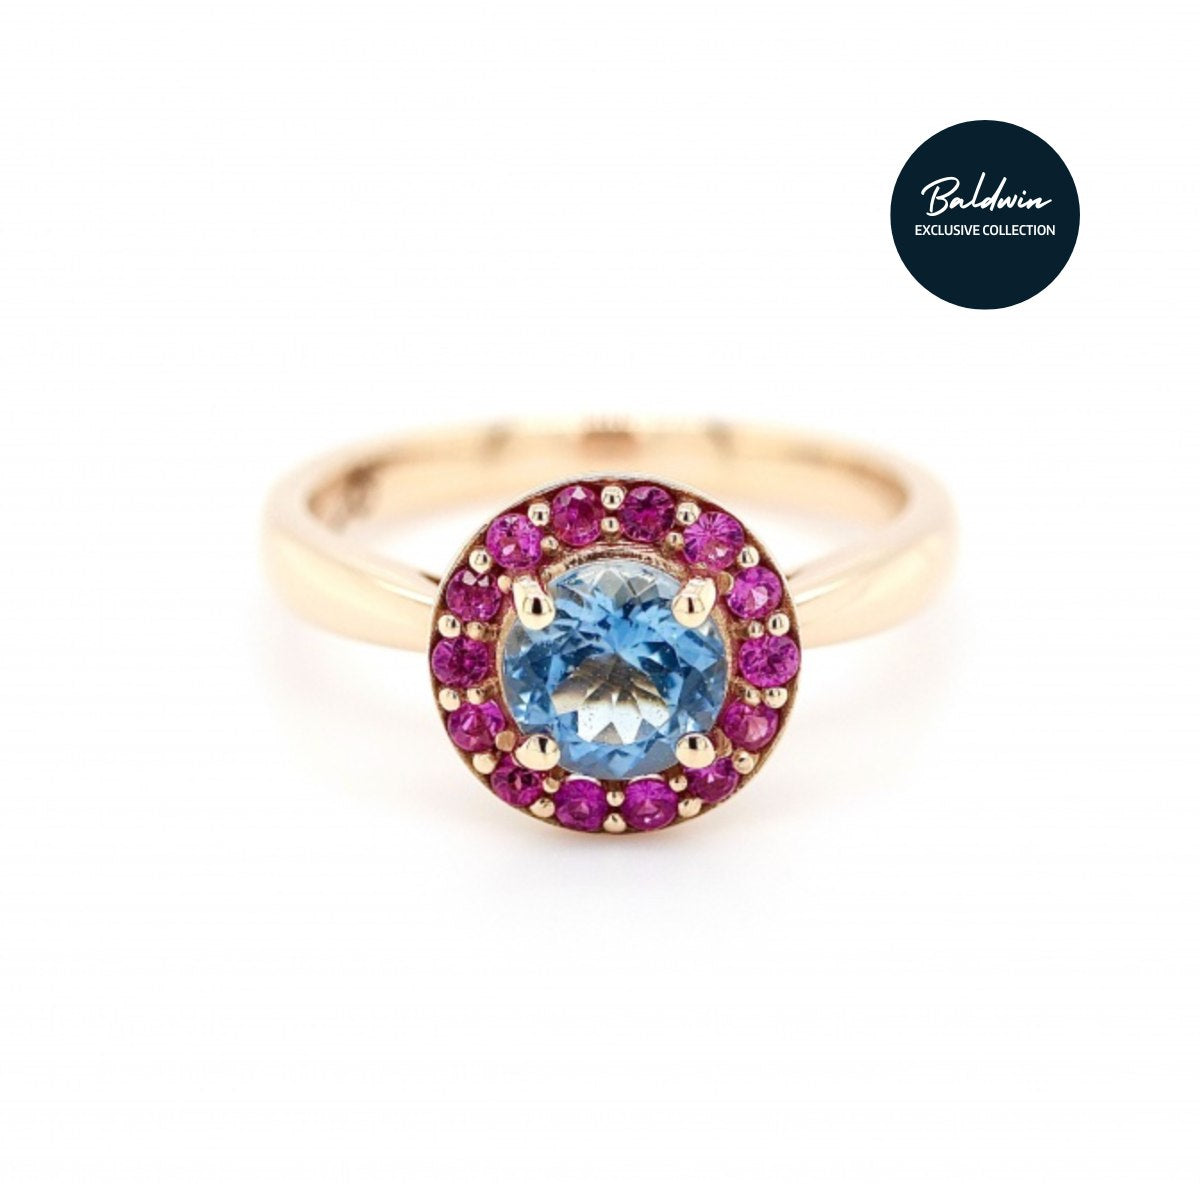 Aqua Marine and Pink Sapphire ring